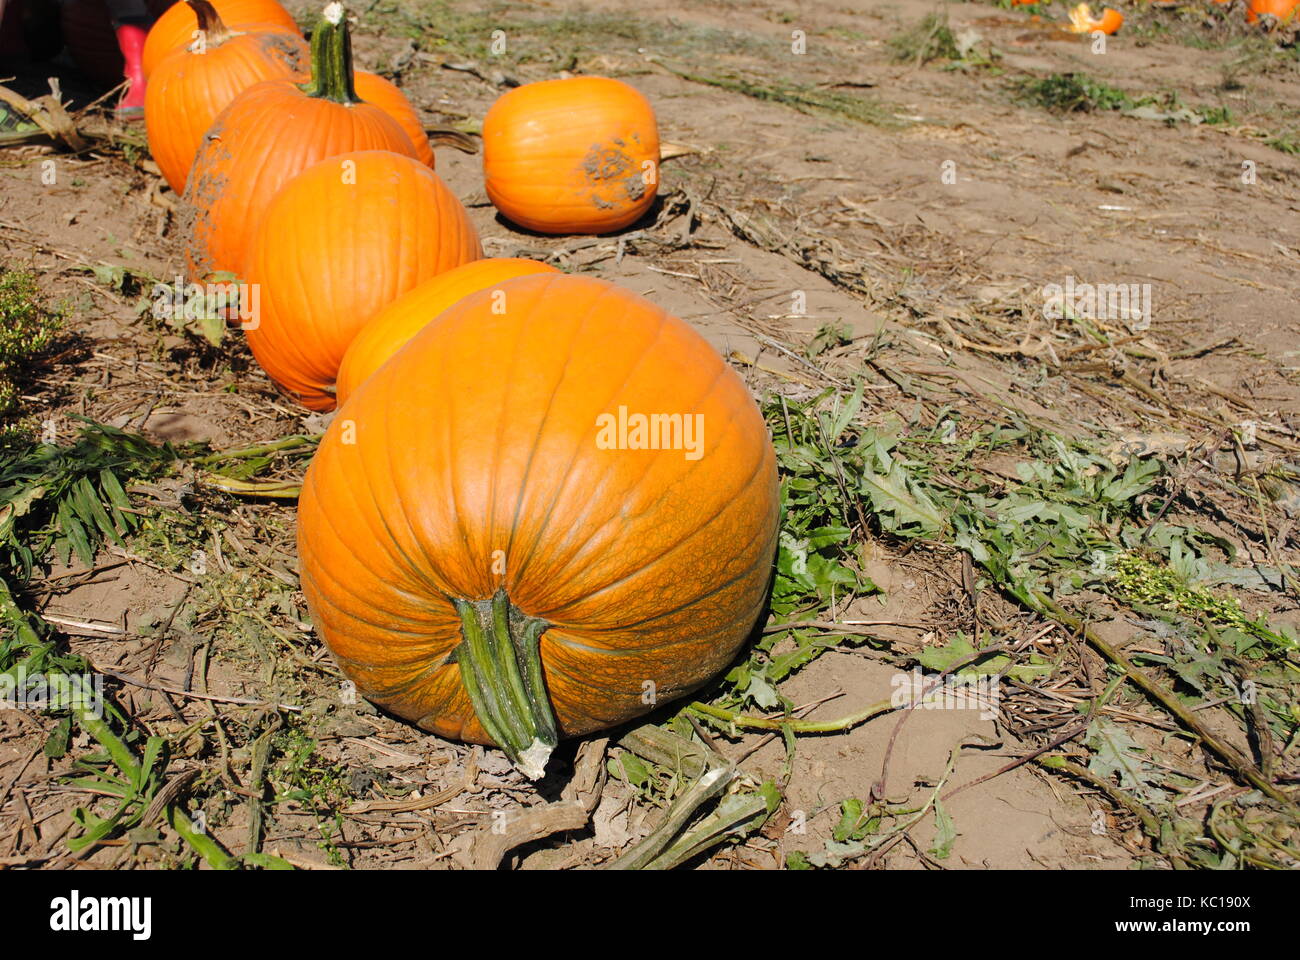 Several pumpkins Stock Photo